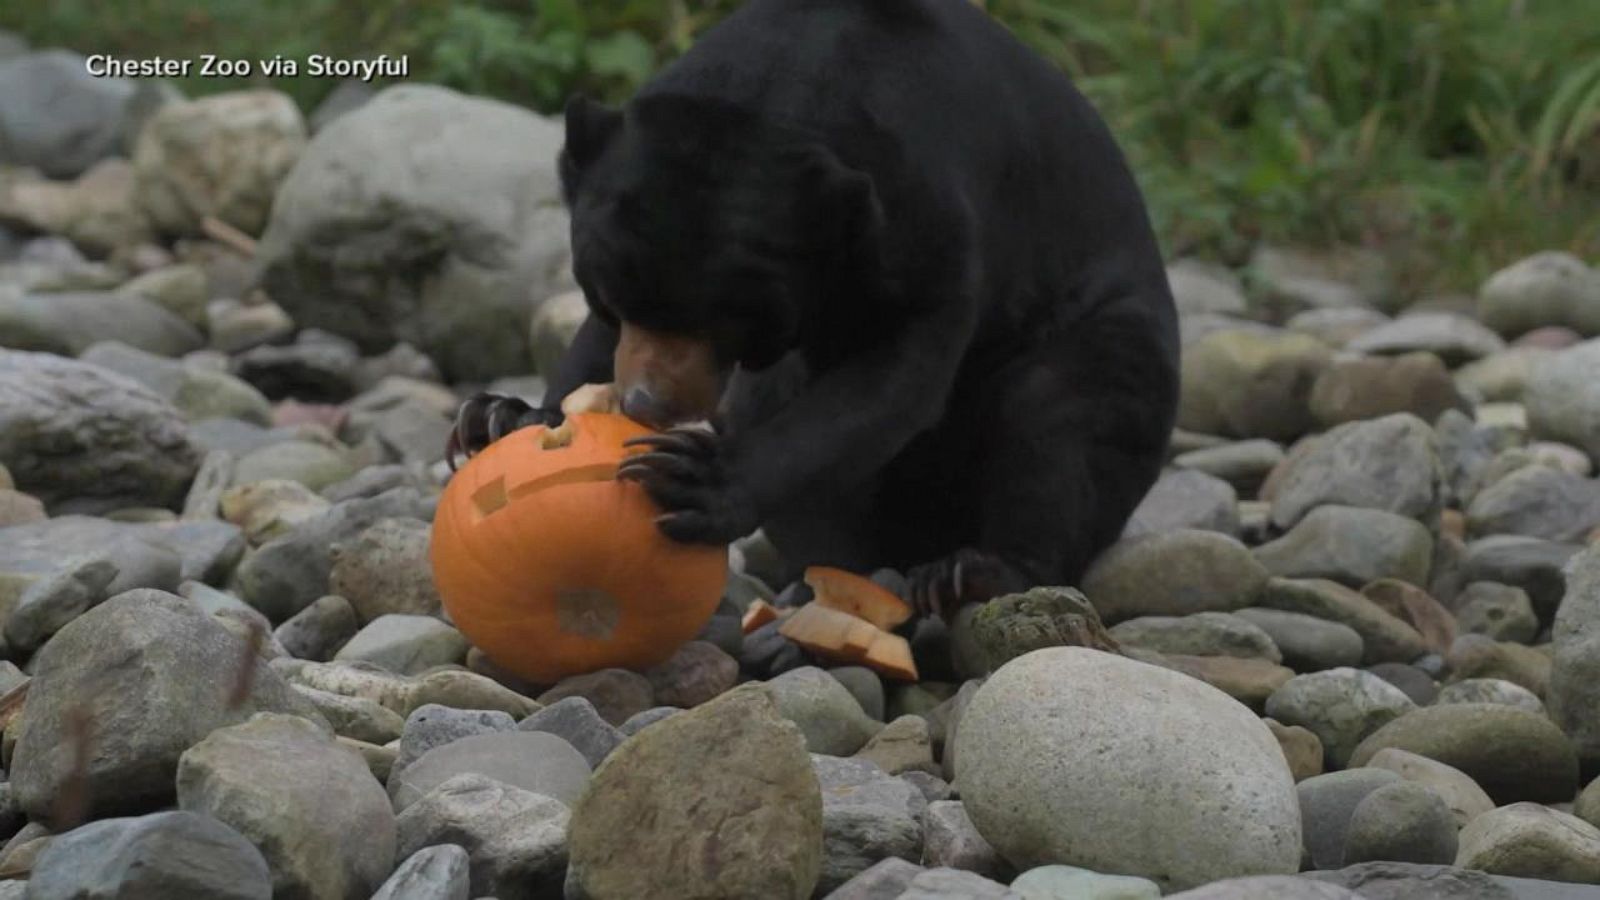 Zoo animals getting into Halloween spirit - Good Morning America